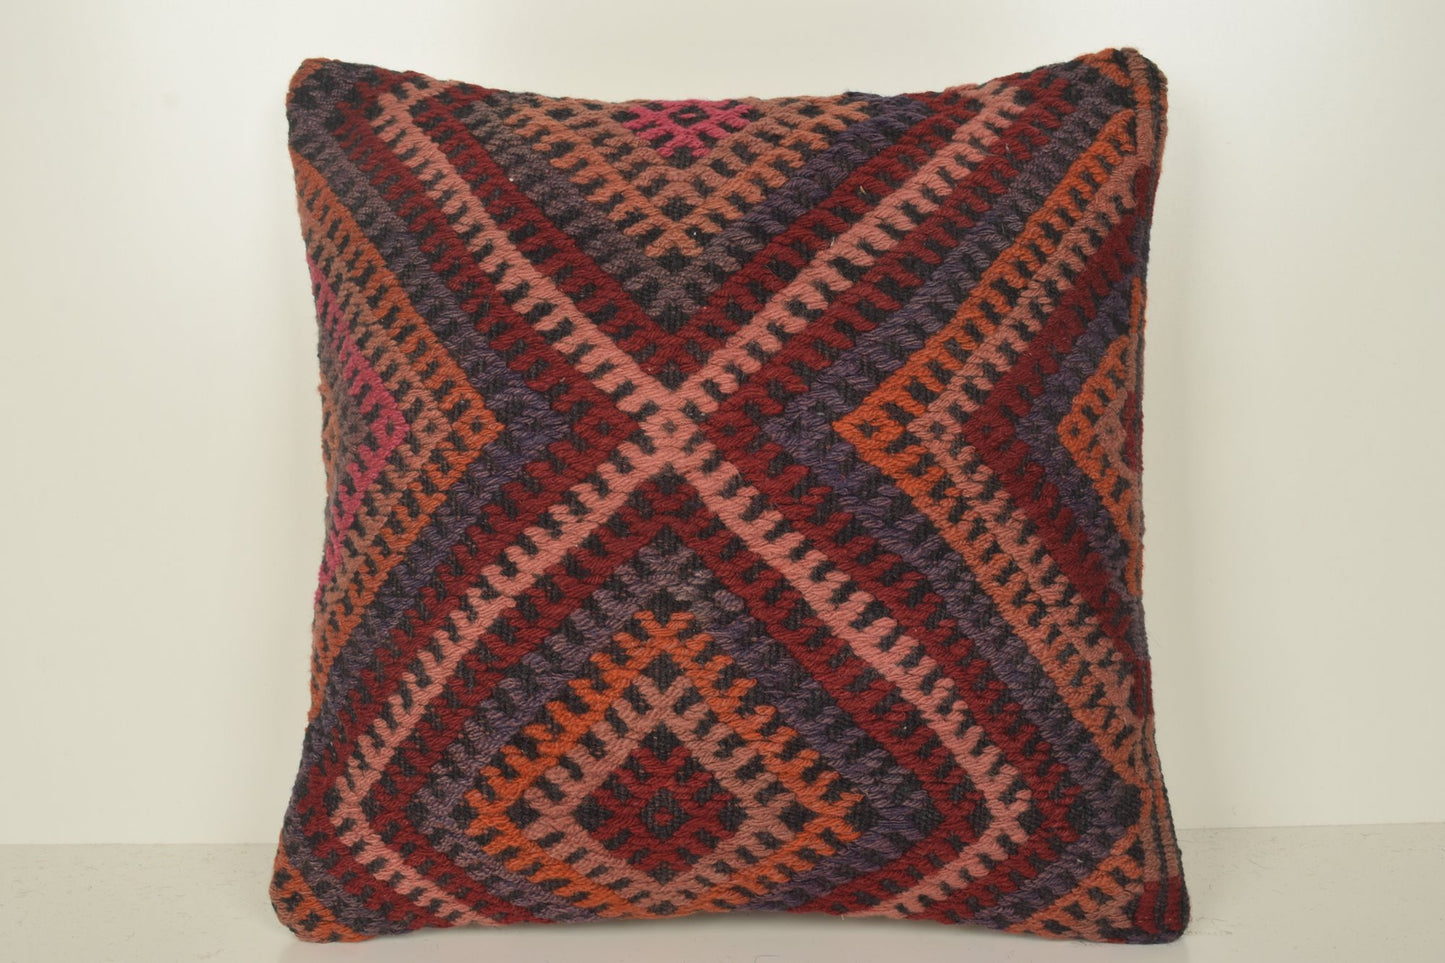 Vintage Rug Pillows B02138 20x20 National Geometric Rare